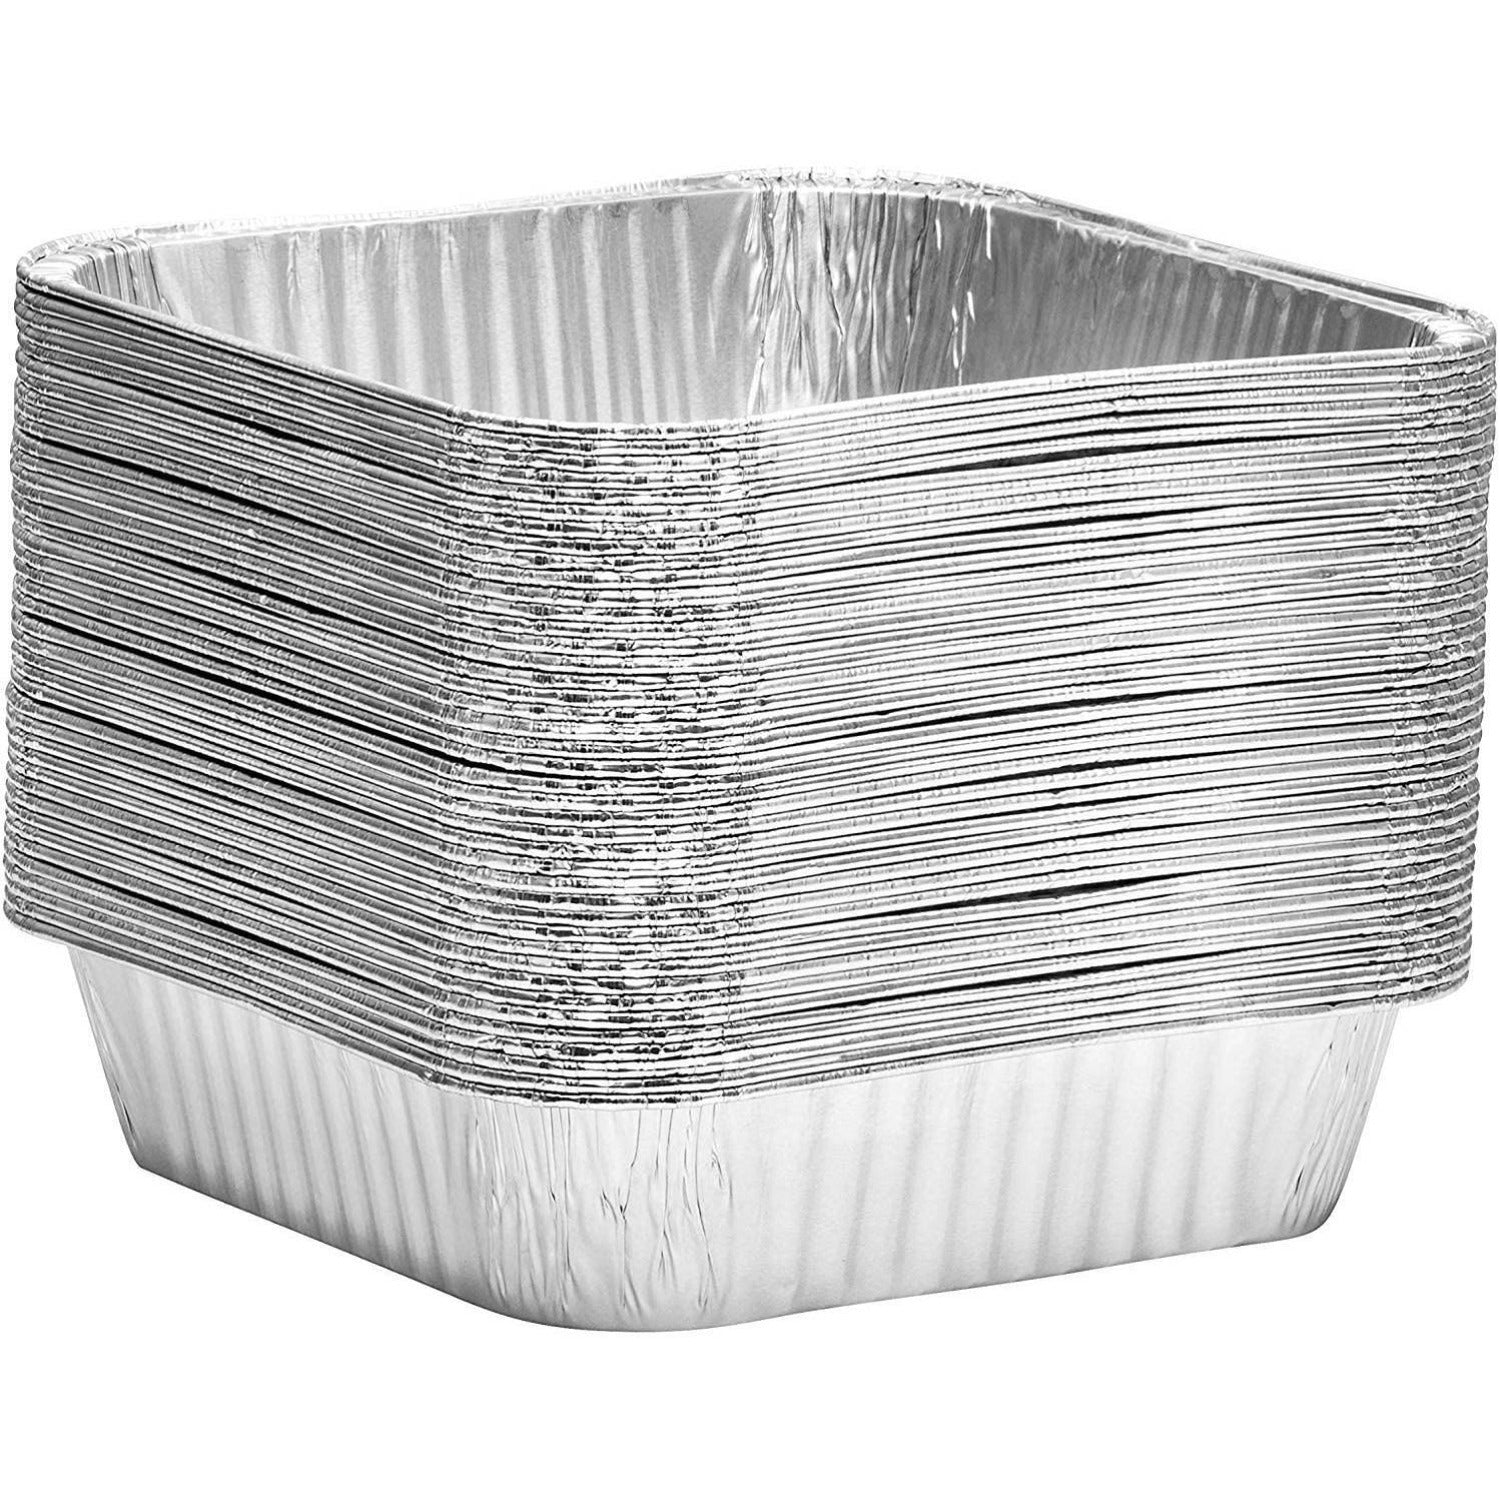 8 Square Disposable Aluminum Baking Pan #1155NL